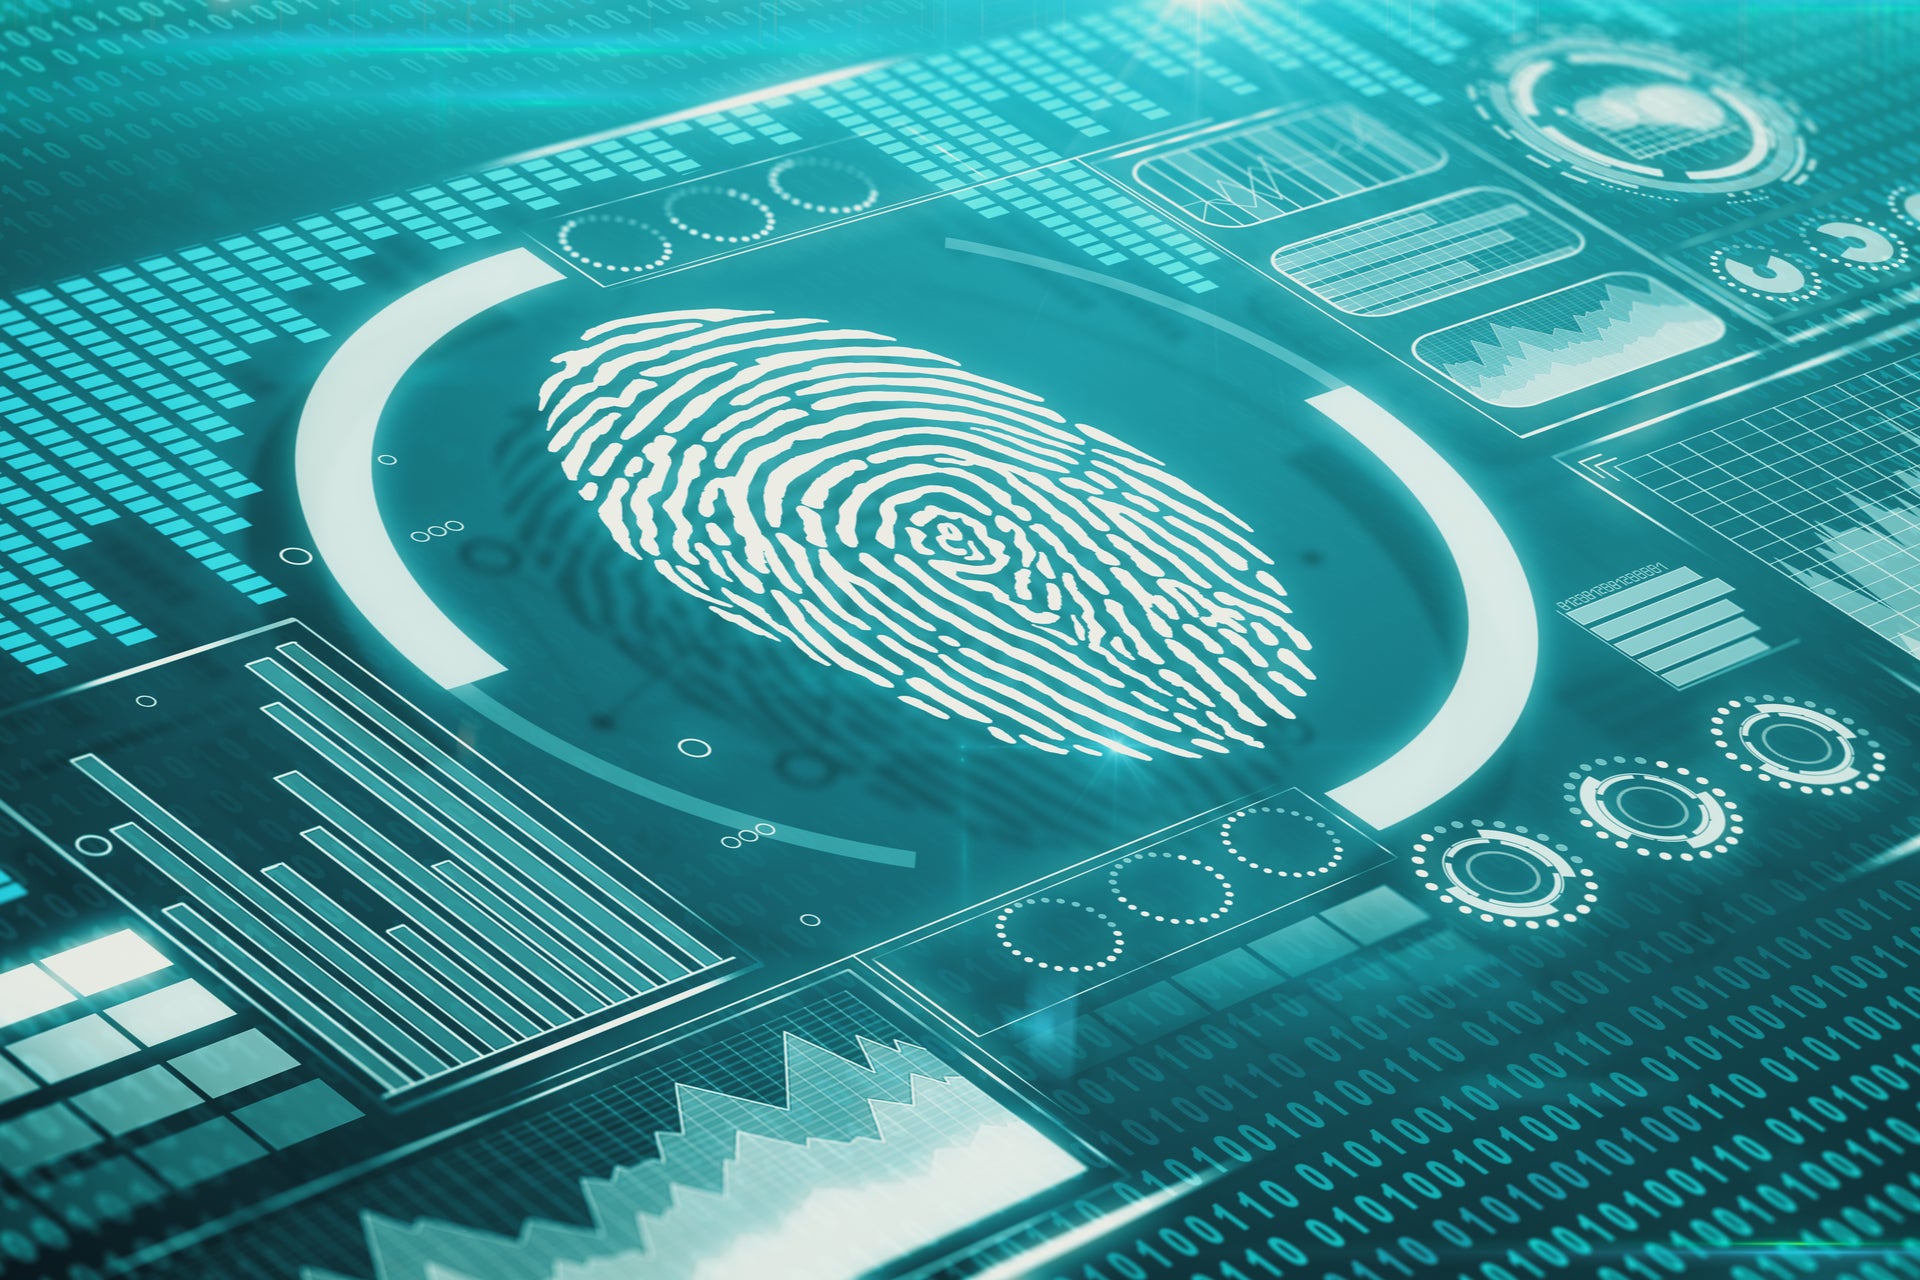 Suprema downplays biometric data leak of ‘one million fingerprints’